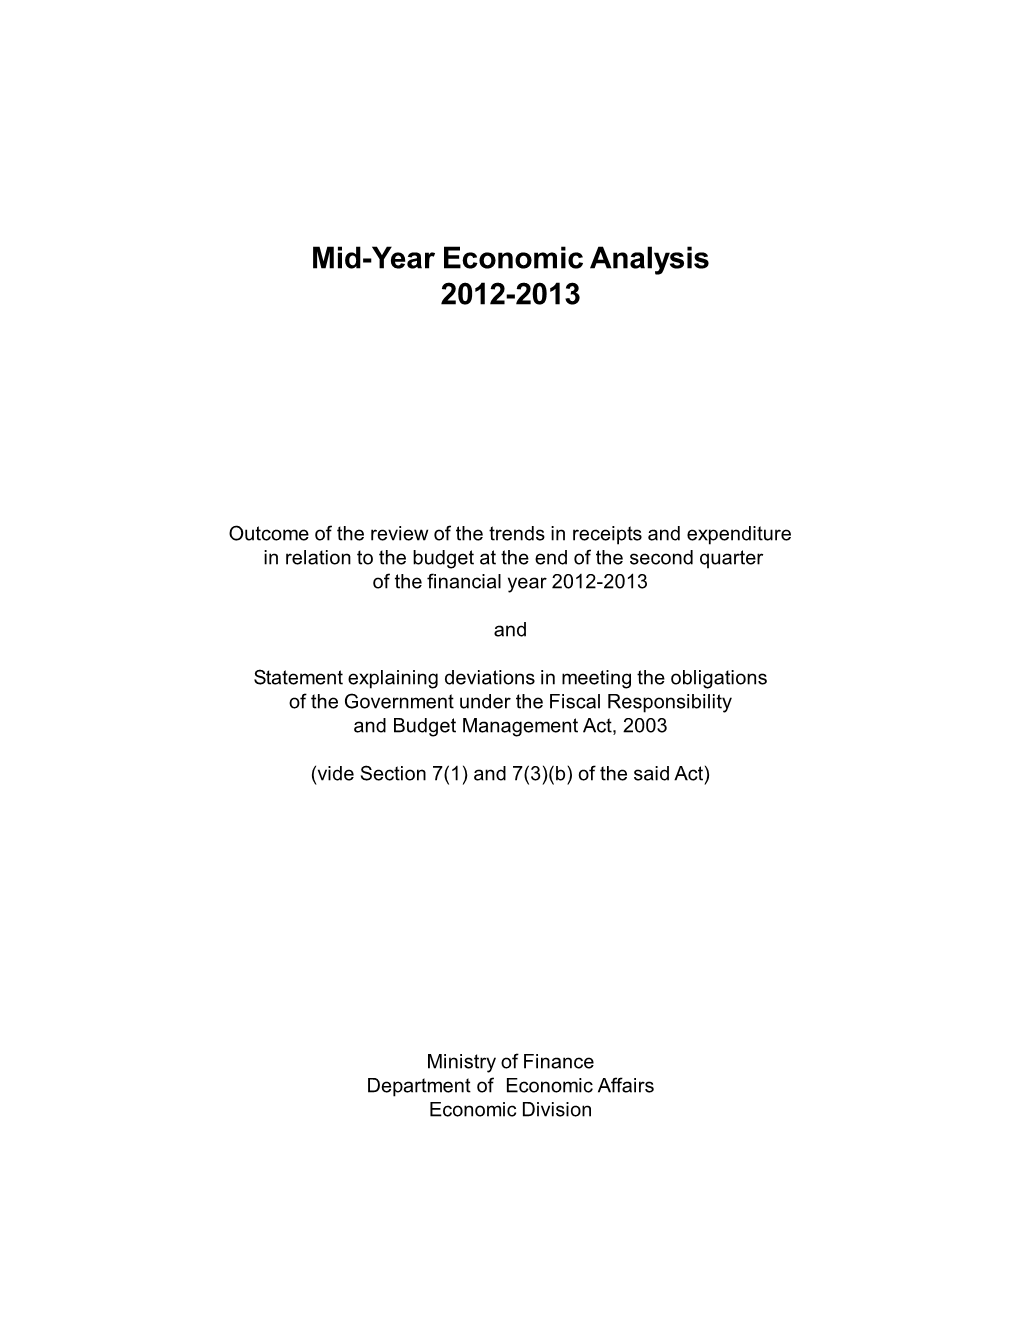 Mid-Year Economic Analysis 2012-2013